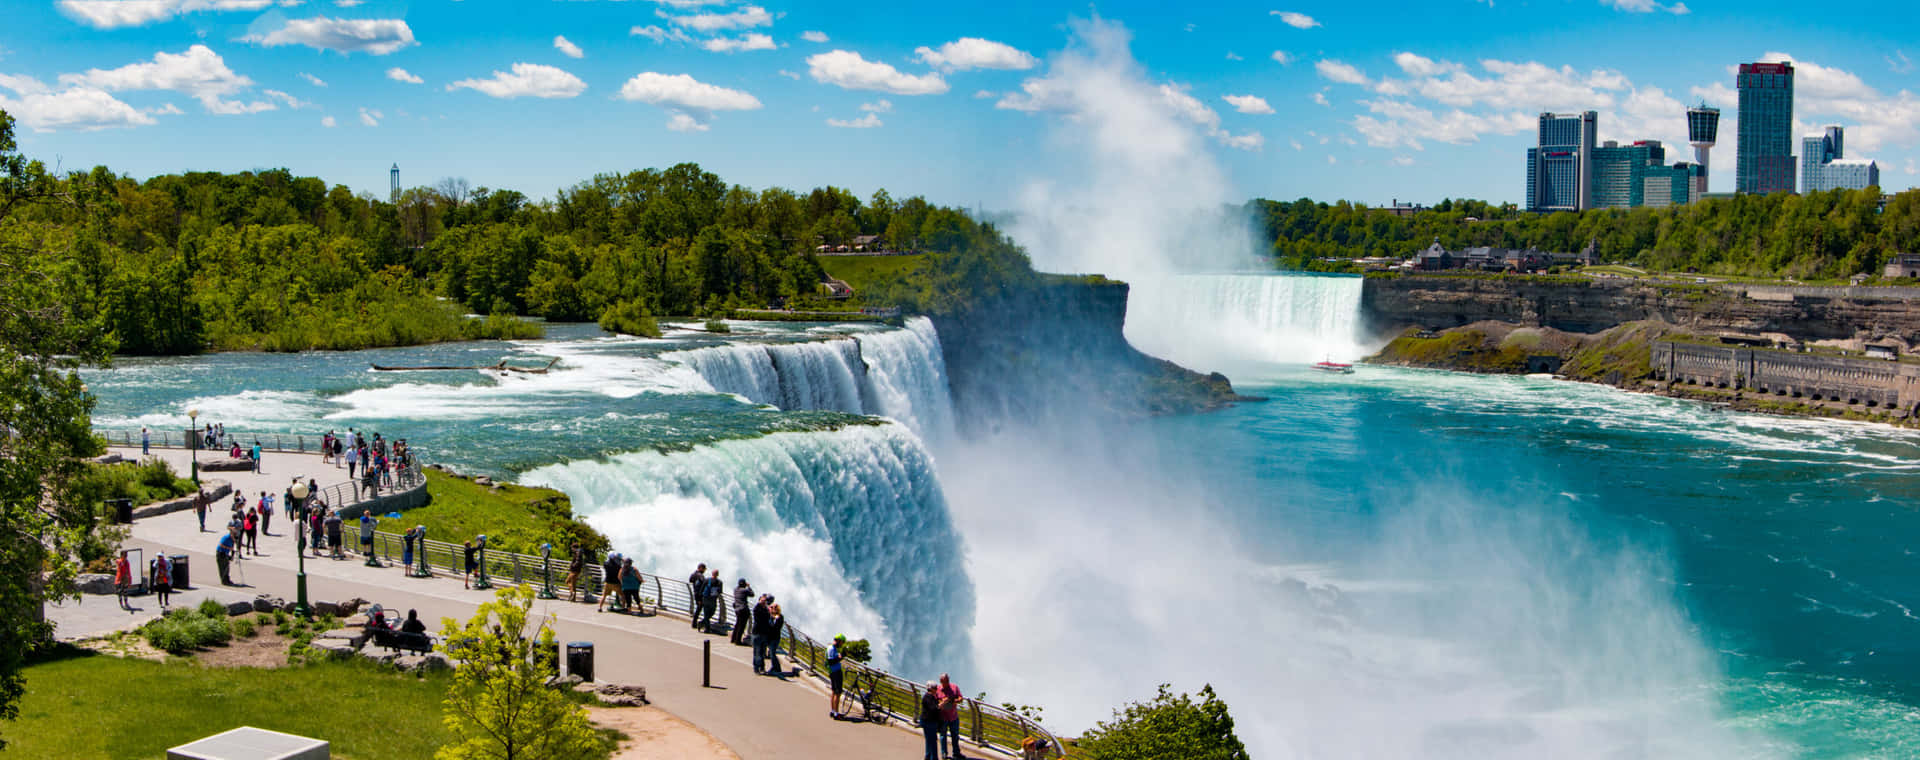 Niagara Falls Canada Aerial View Wallpaper